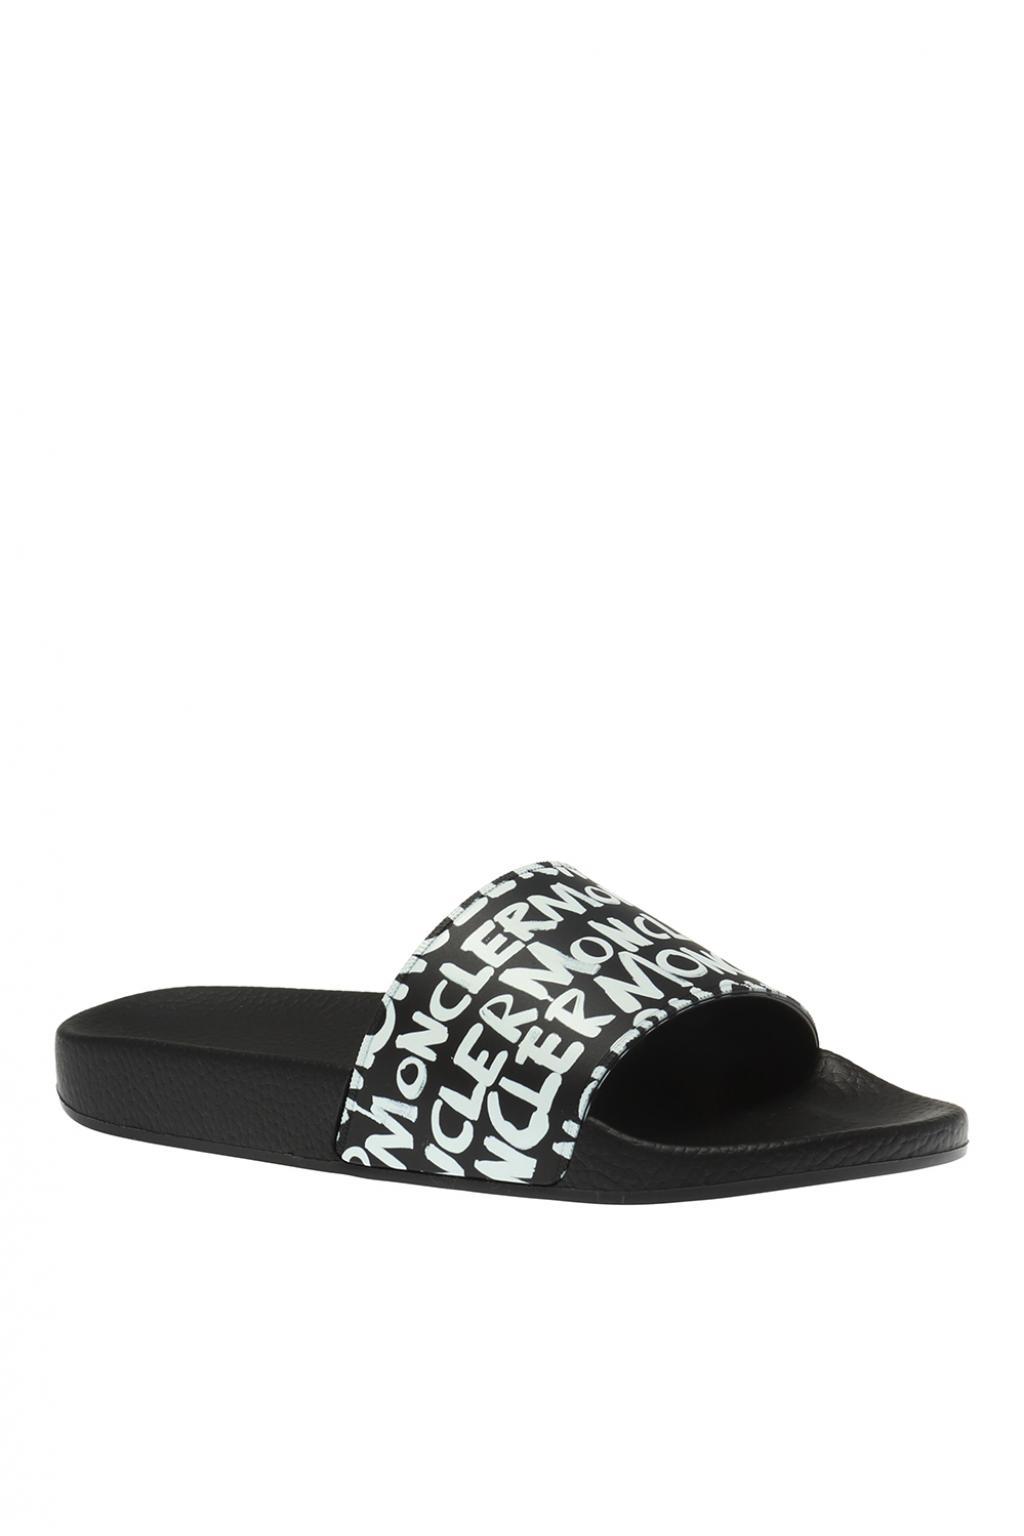 Moncler Rubber Graffiti Logo Print Slide Sandals in Black - Save 43% - Lyst